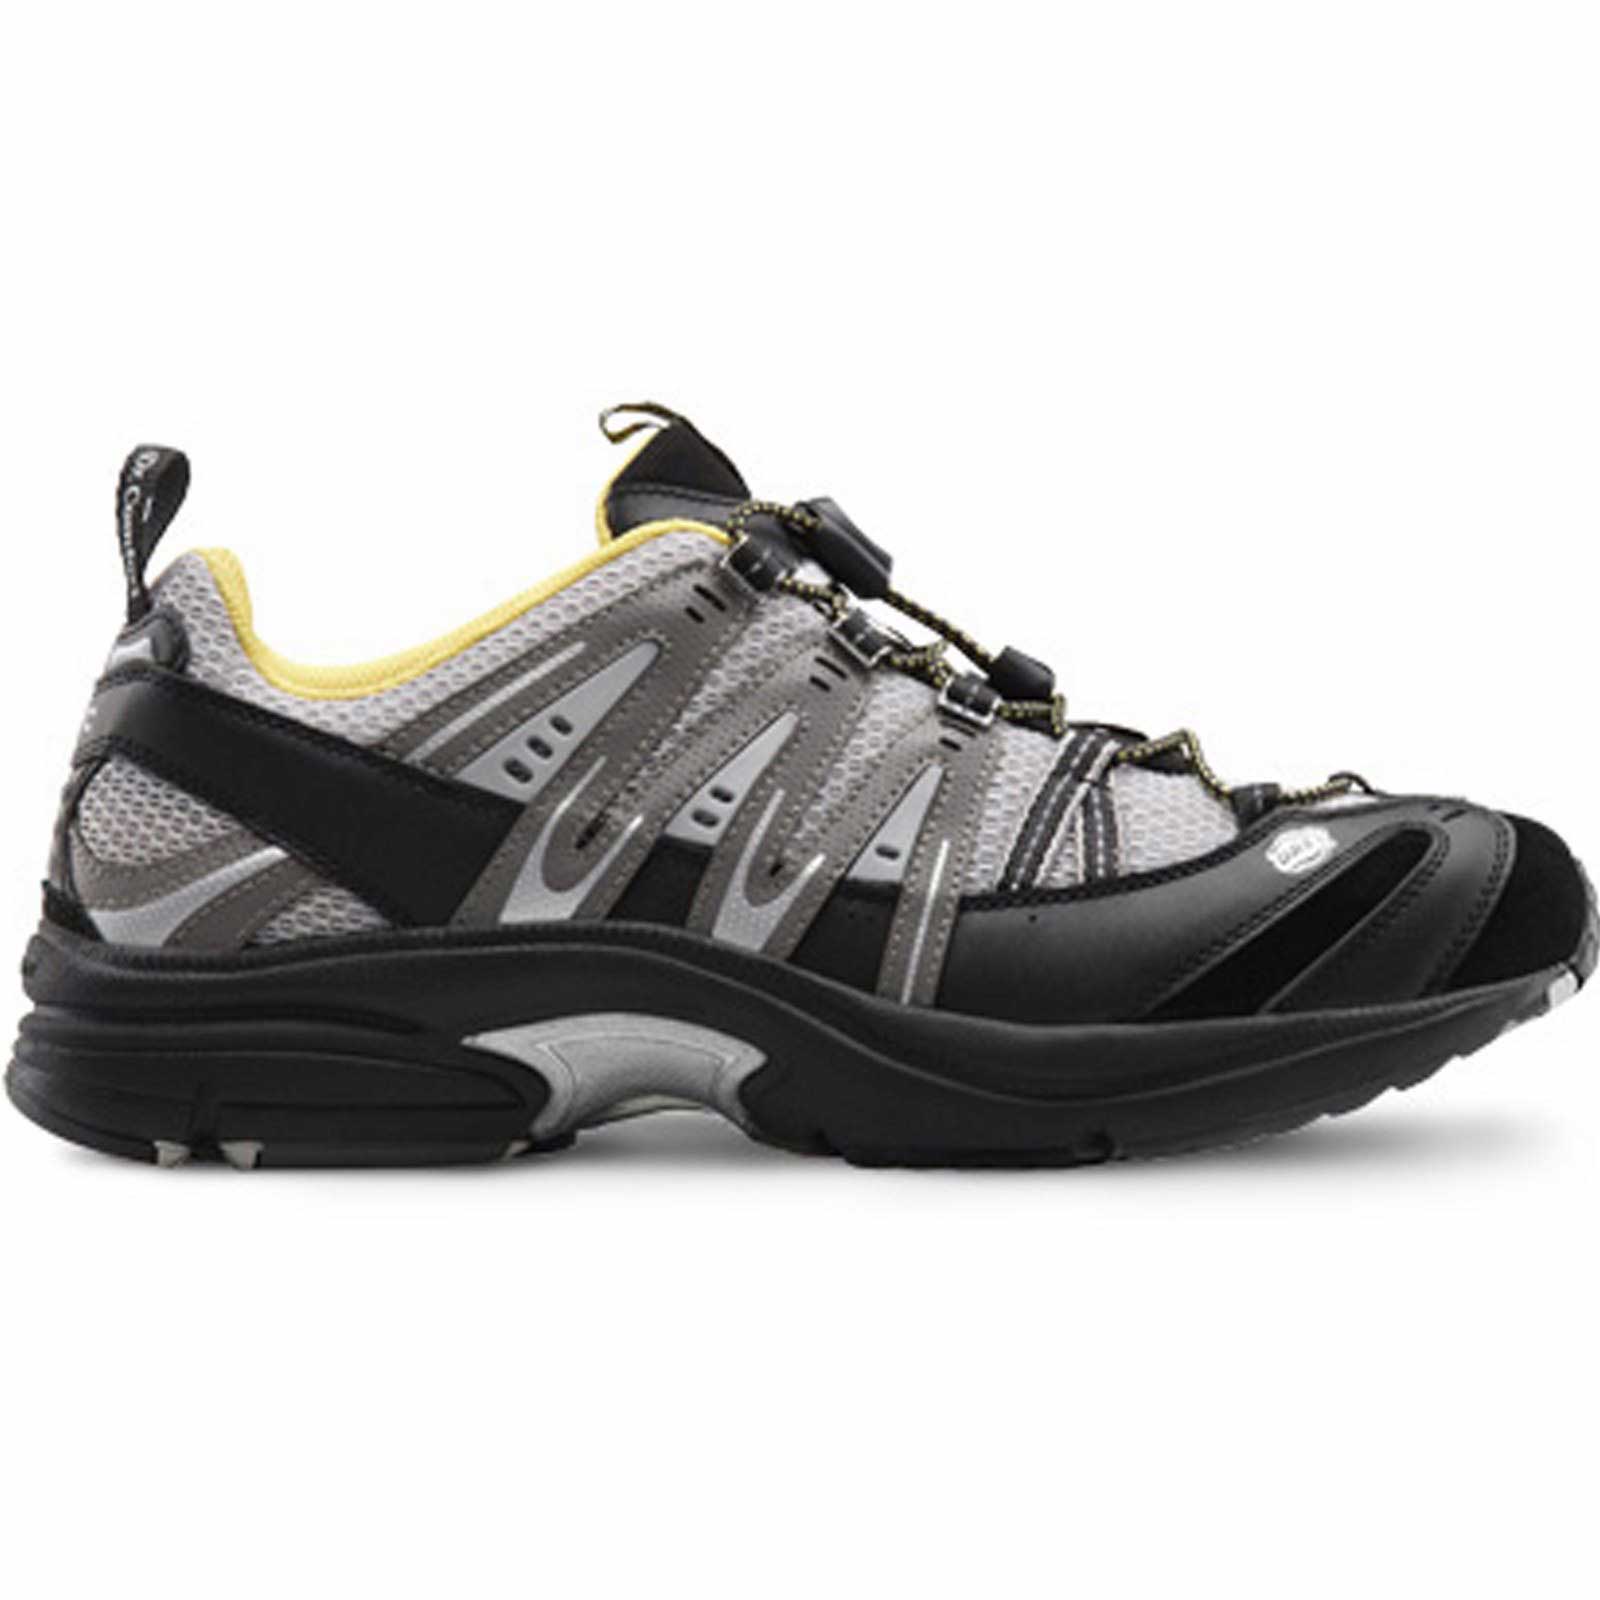 Dr. Comfort Performance Men's Athletic Shoe: 8.5 Wide (E/2E) Metallic/Red Elastic & Standard Laces - image 5 of 5